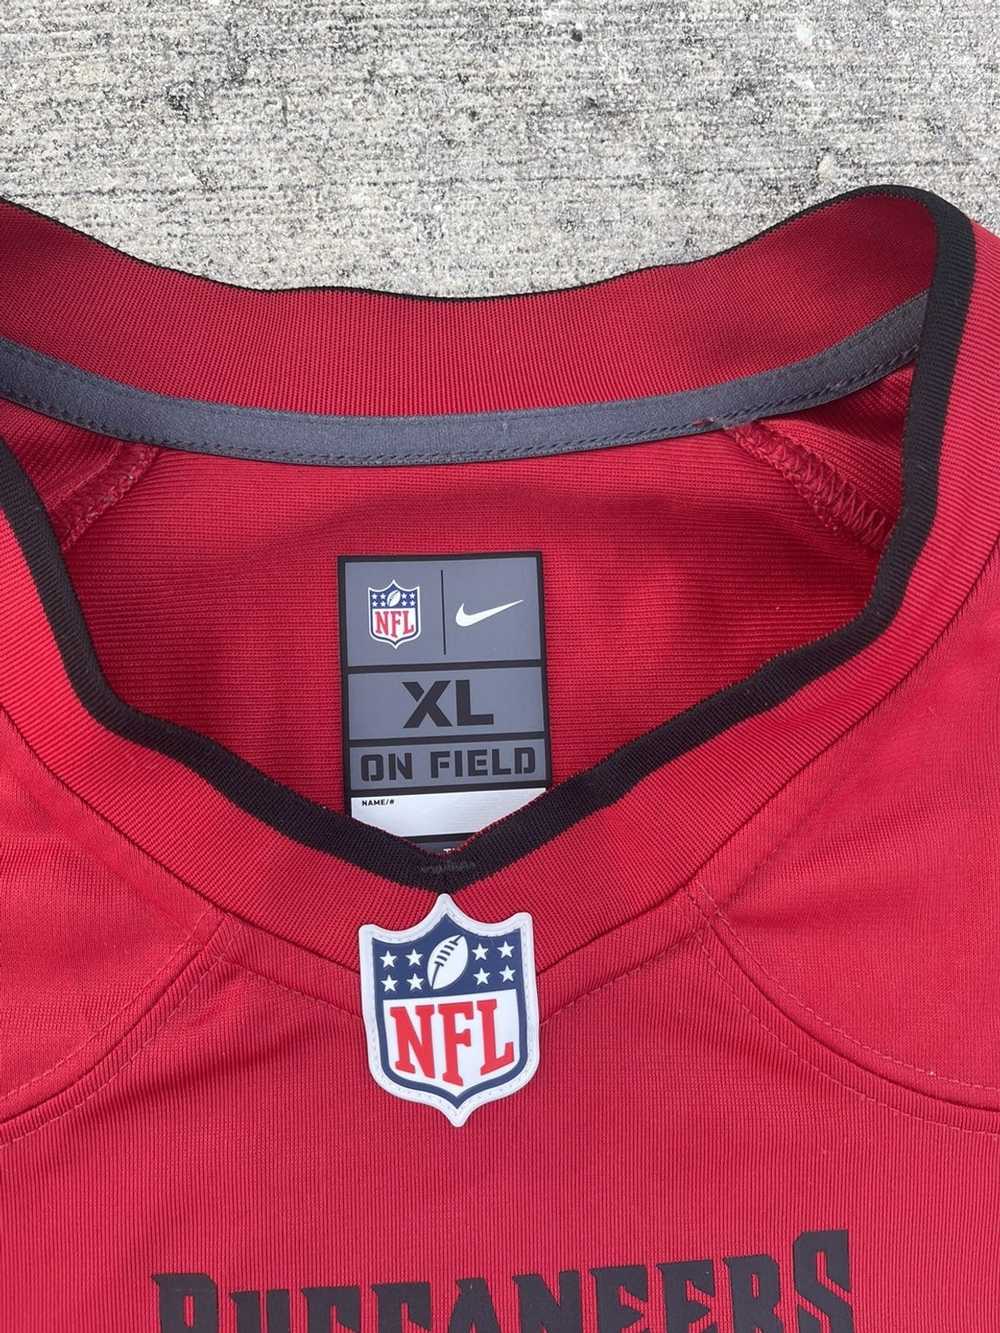 NFL × Nike Tom Brady Buccaneers jersey 2020 season - image 3